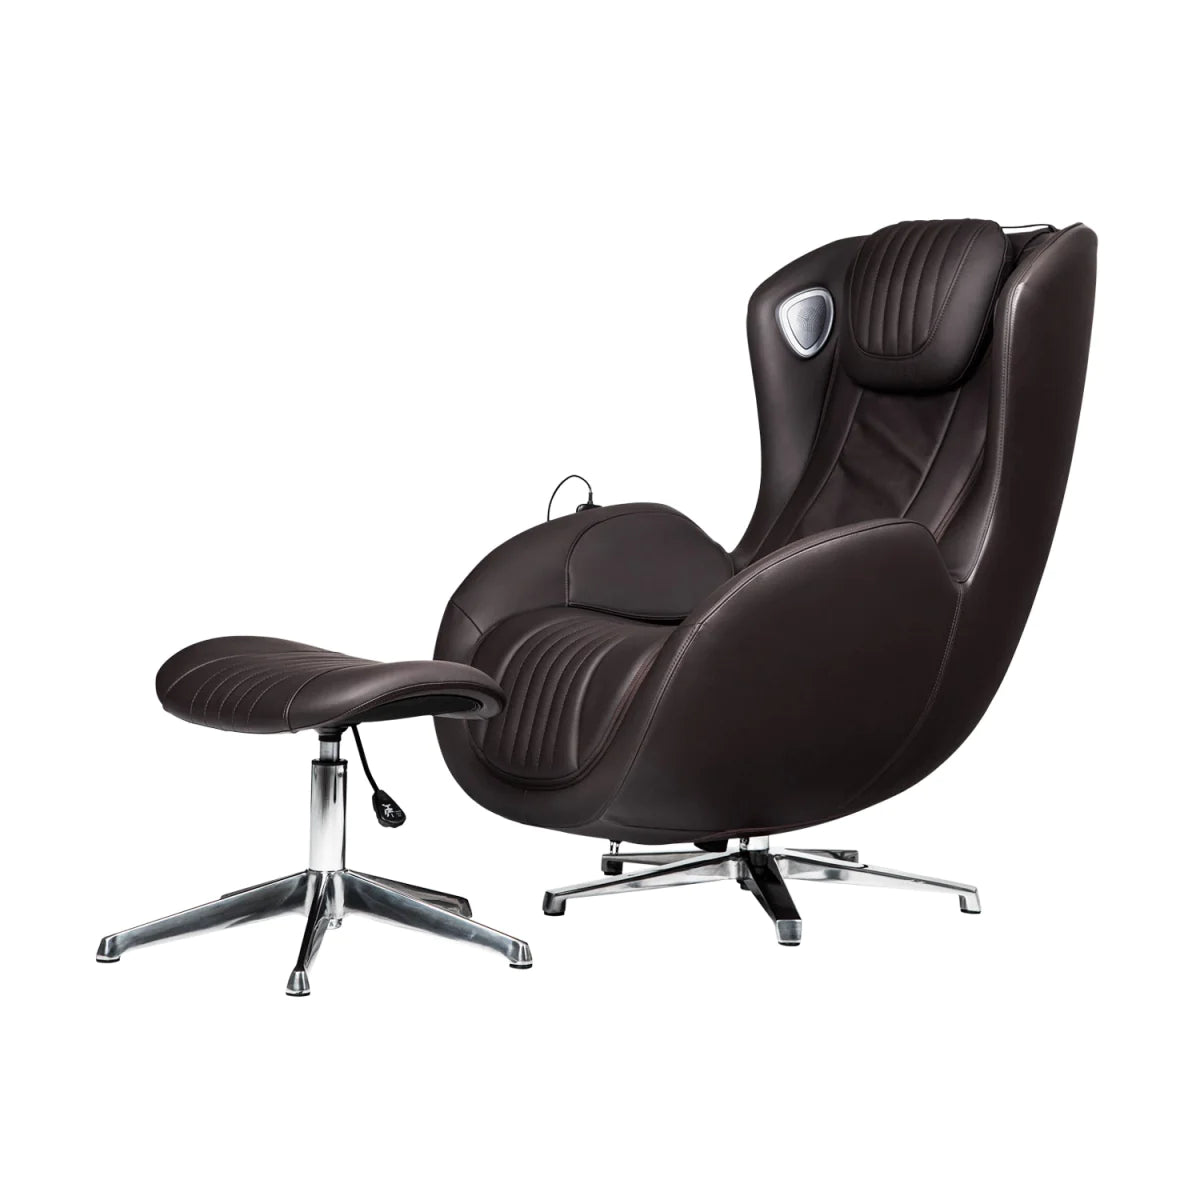 OS-Bliss GL RELAX MASSAGE CHAIR | Titan Chair